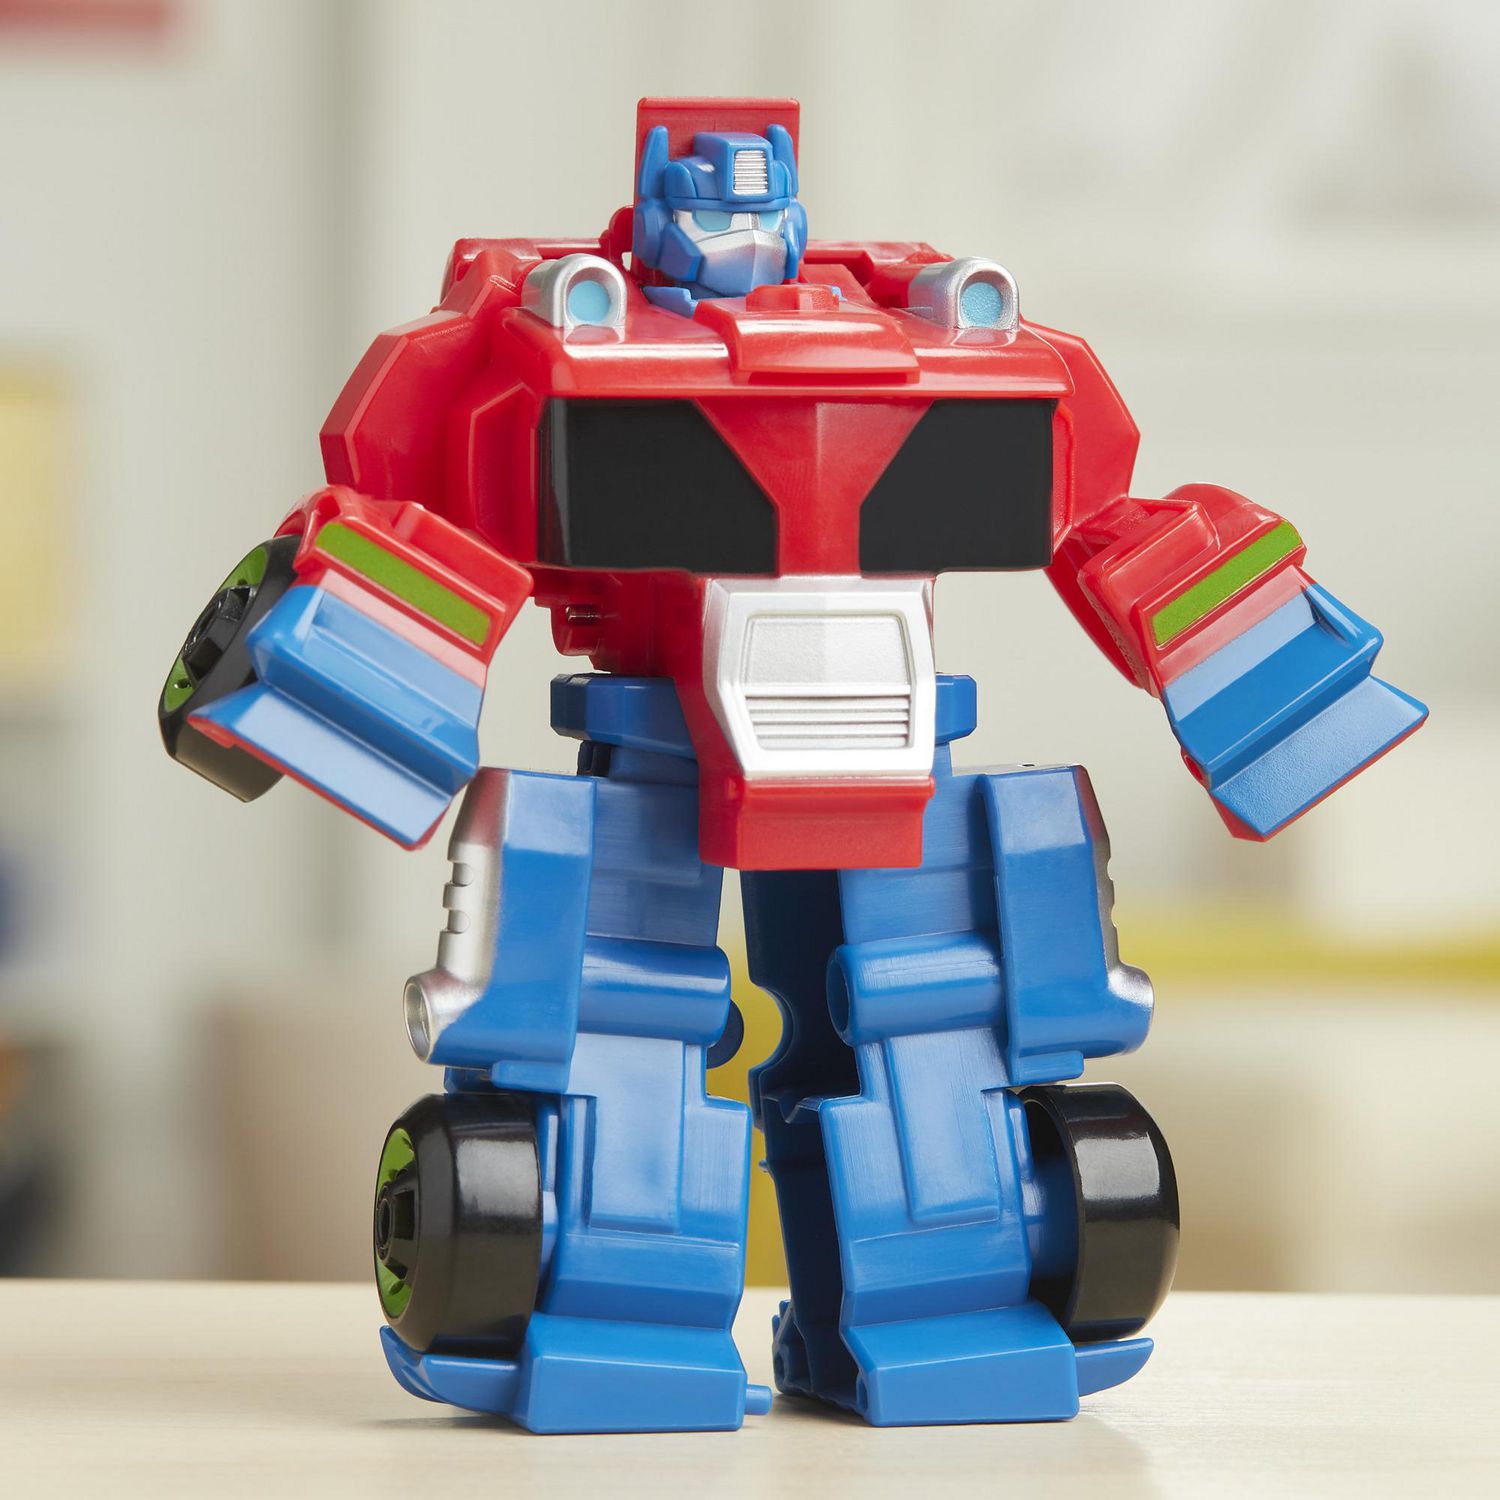 Playskool Heroes Transformers Rescue Bots Academy Optimus Prime